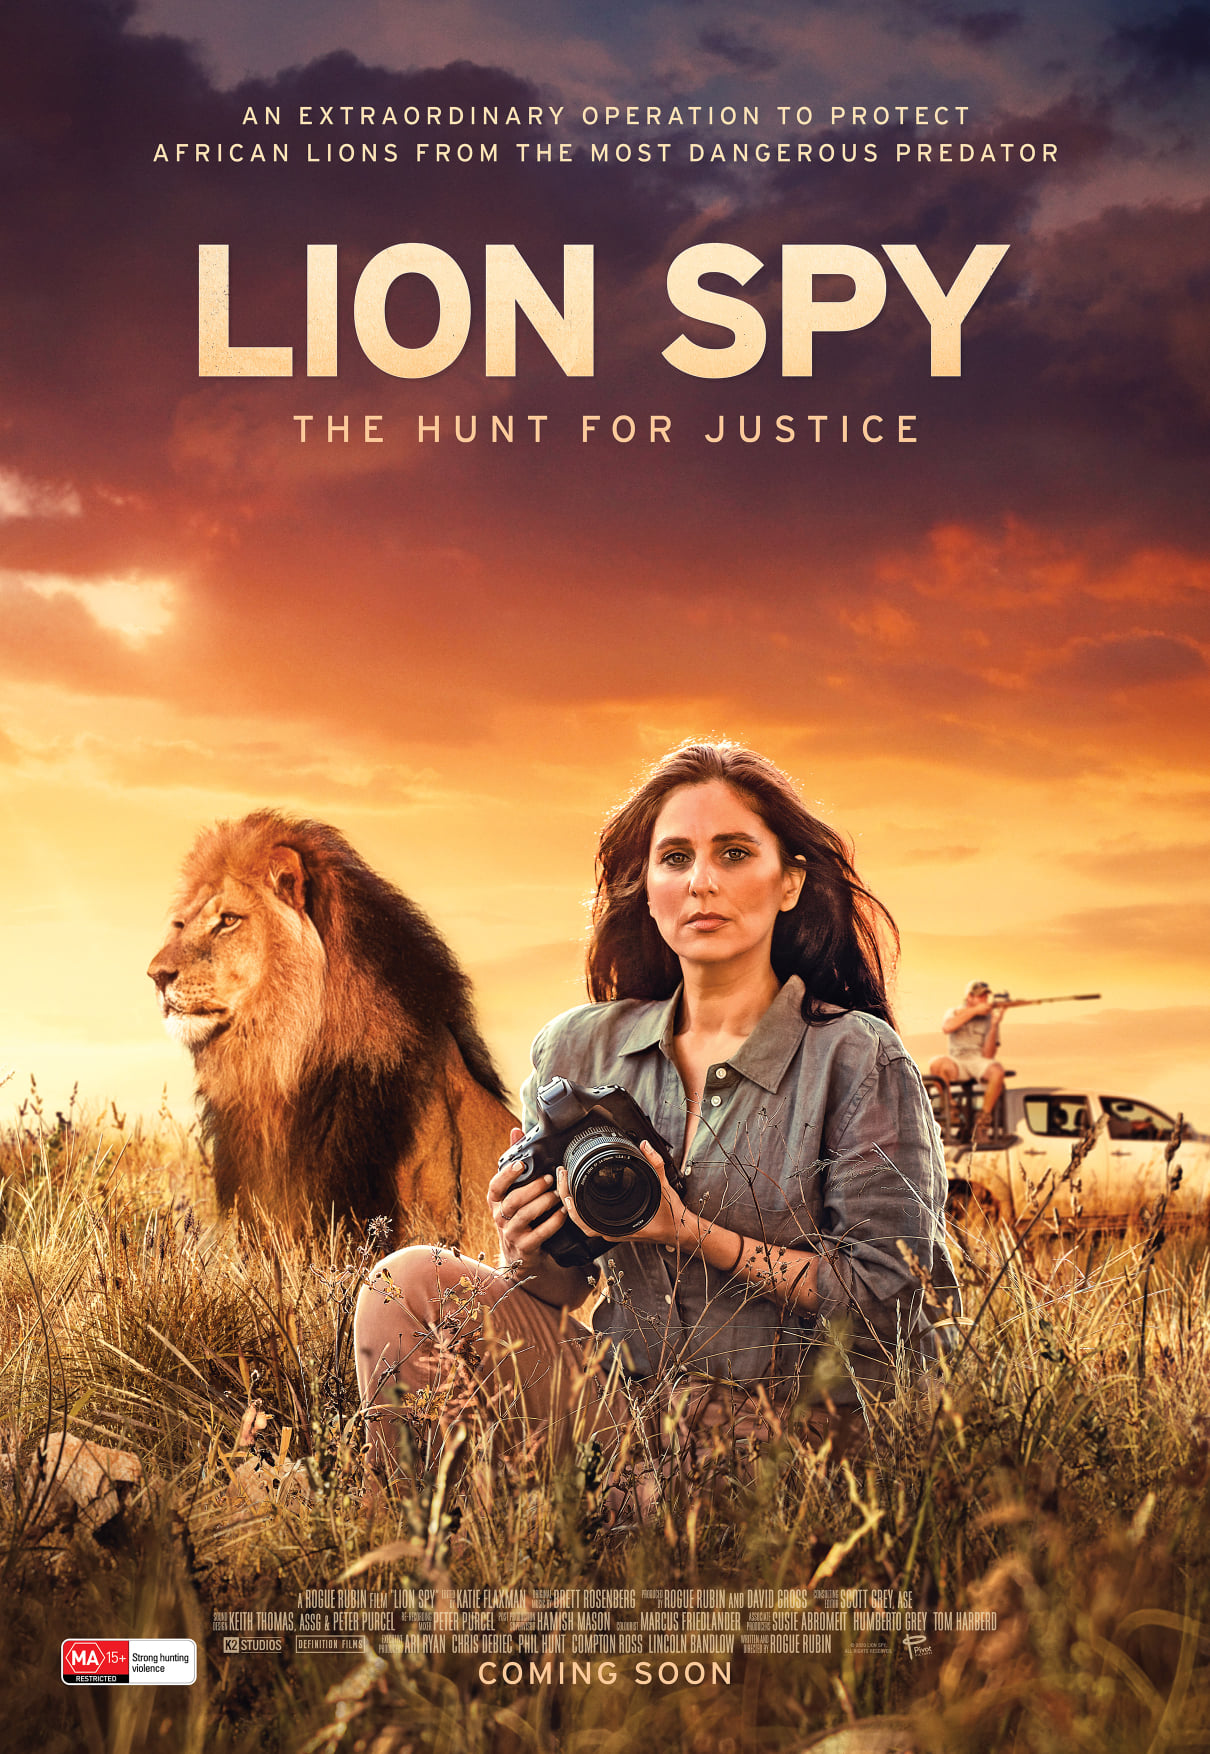 Lion Spy no credits